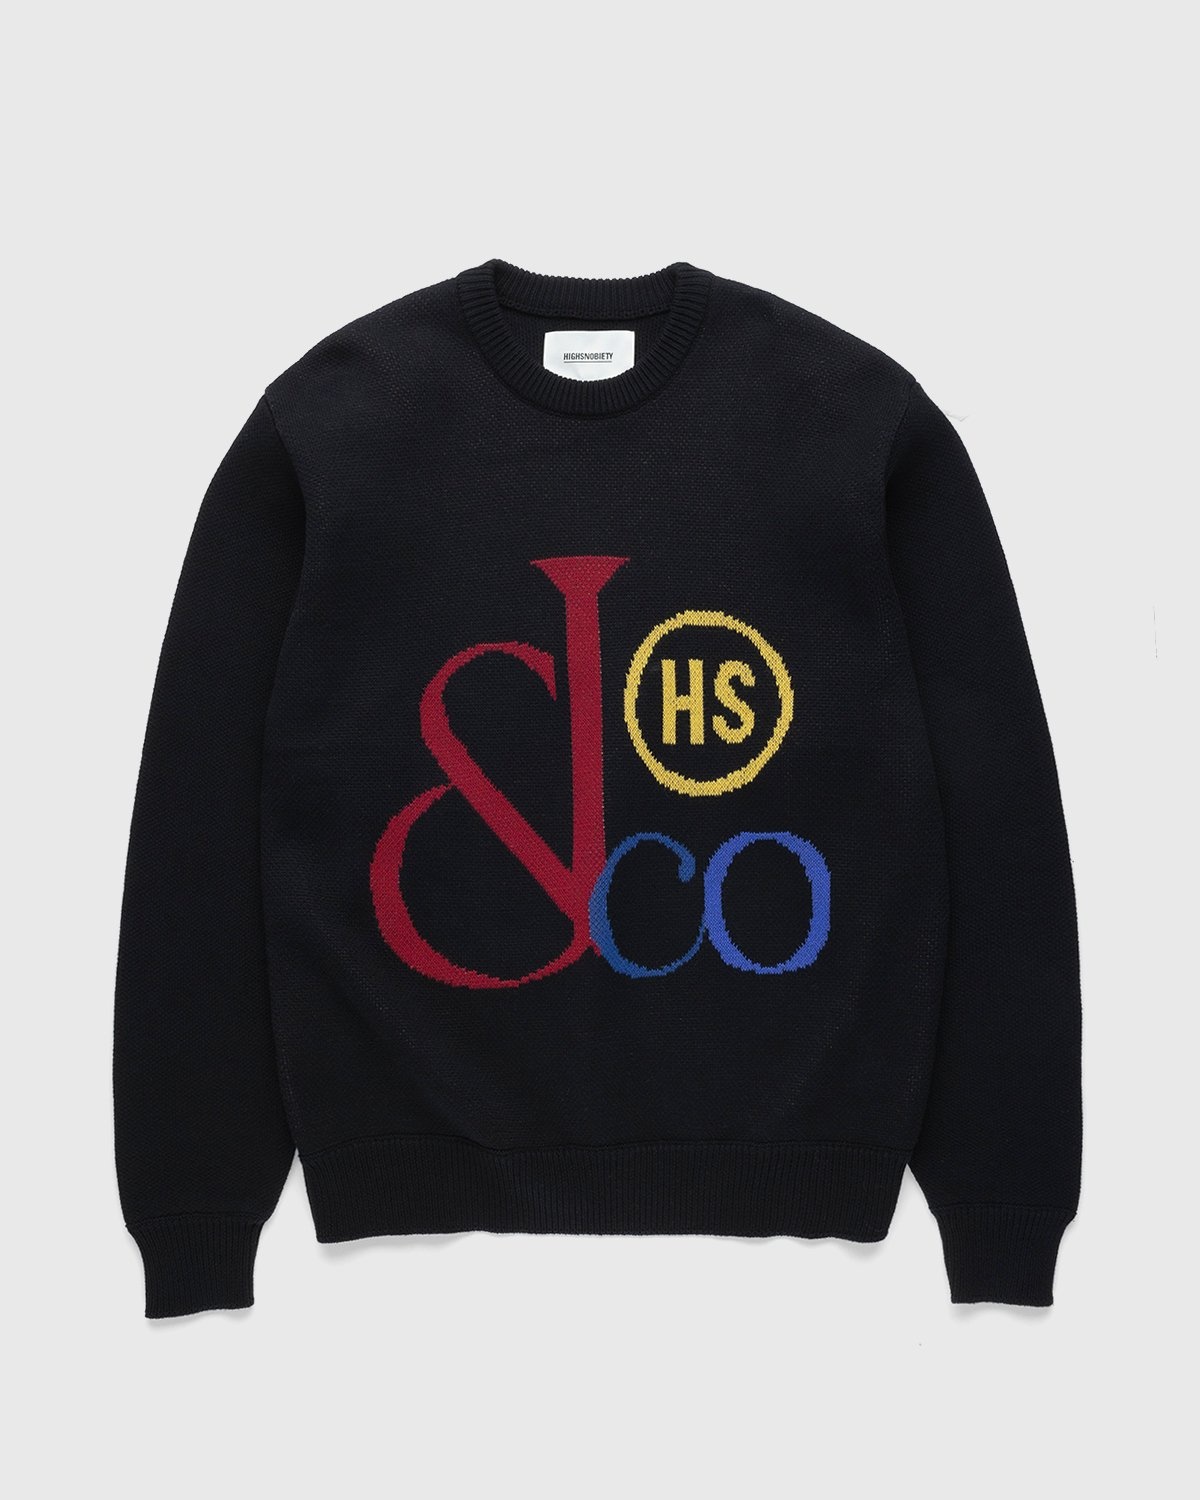 Jacob & Co. x Highsnobiety – Logo Knit Sweater Black - Crewnecks - Black - Image 1